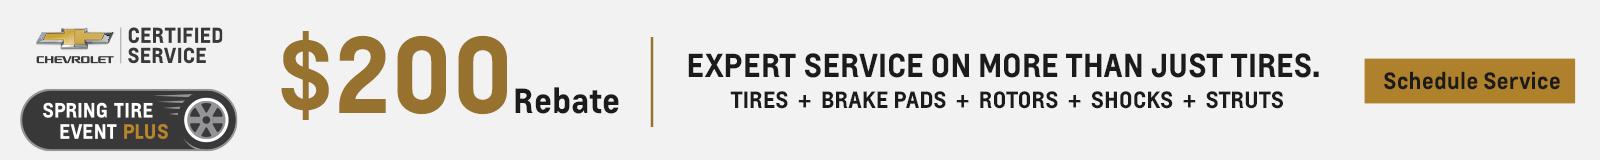 $200 Rebate, Expert service on more than just tires. Tires + Break pads + rotors + Shocks + Sturts